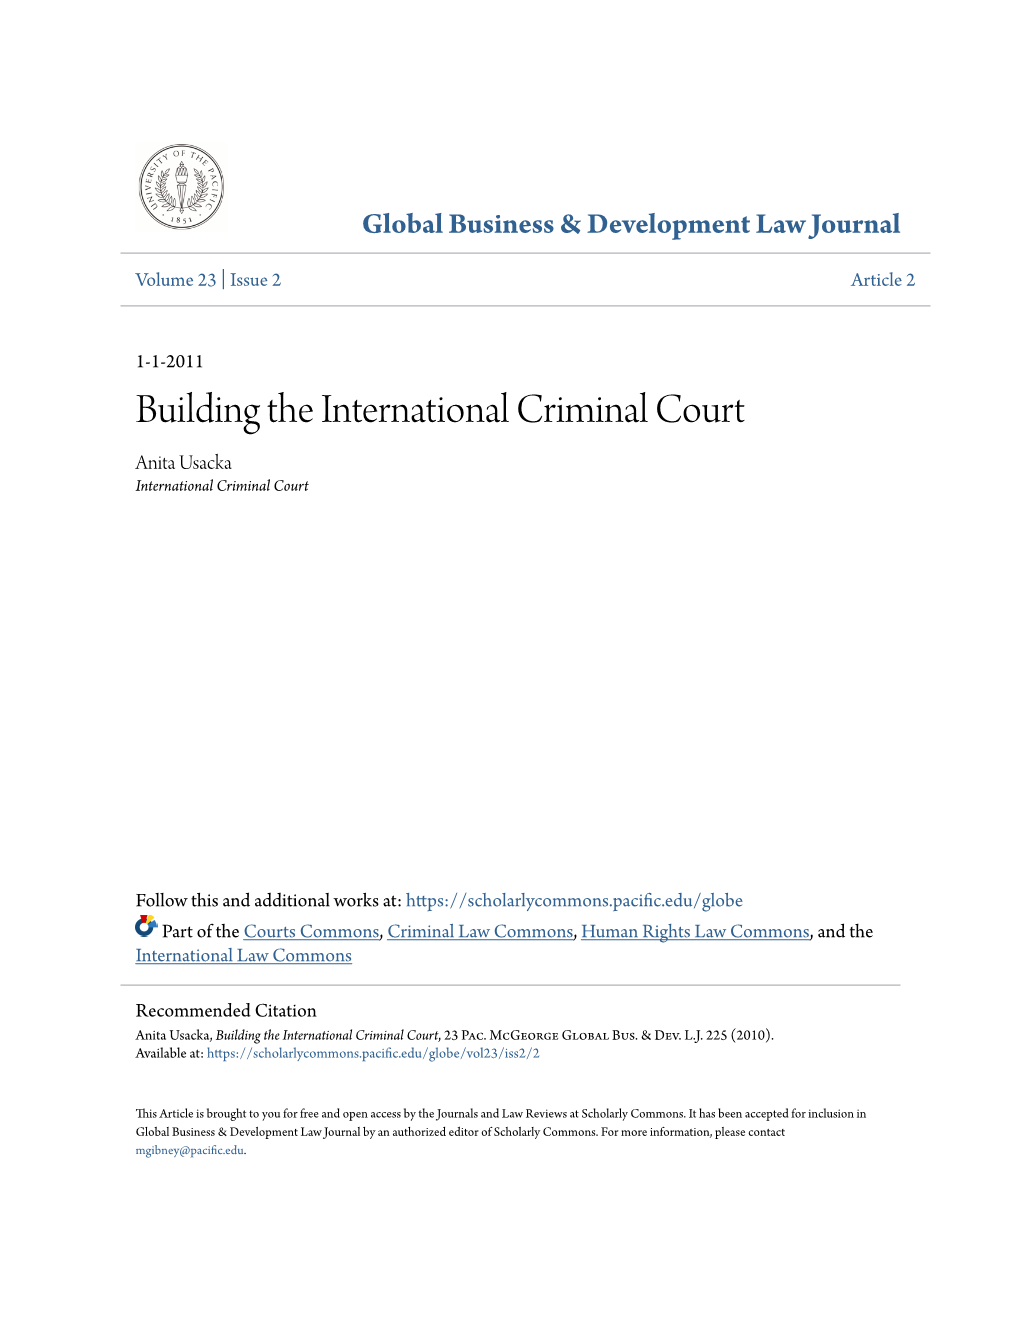 Building the International Criminal Court Anita Usacka International Criminal Court